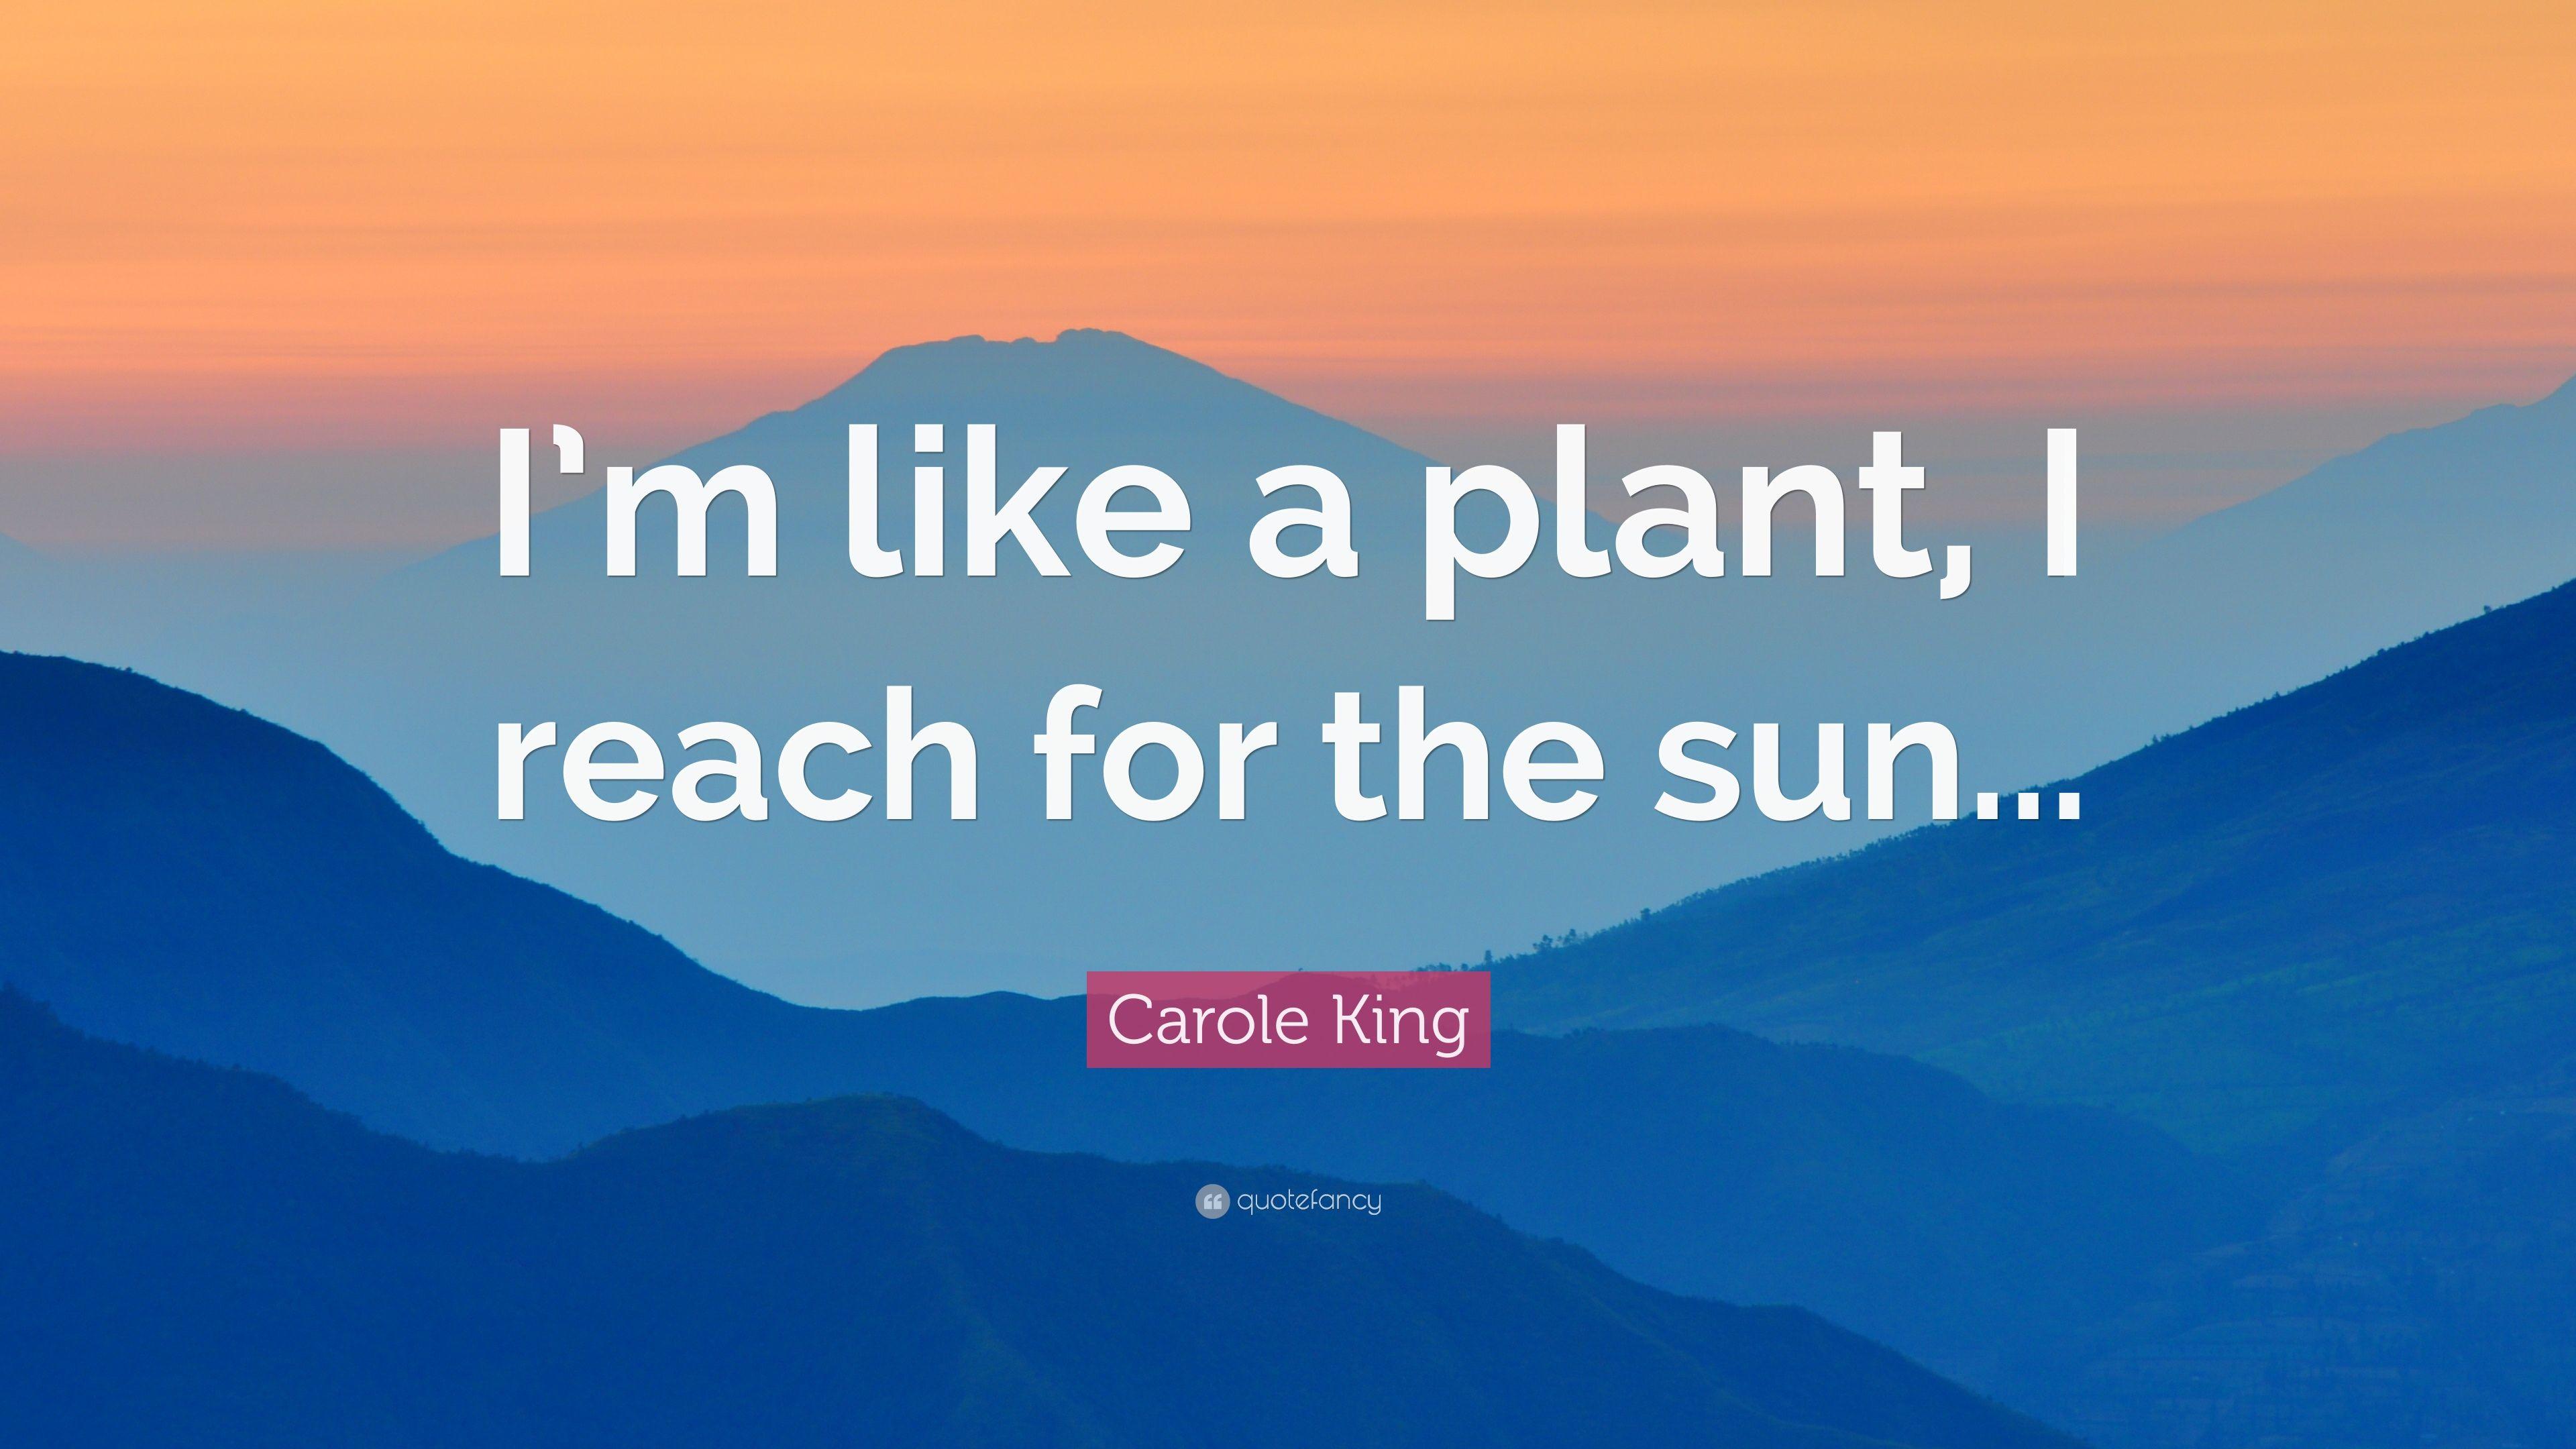 Carole King Quote: “I'm like a plant, I reach for the sun.” 7